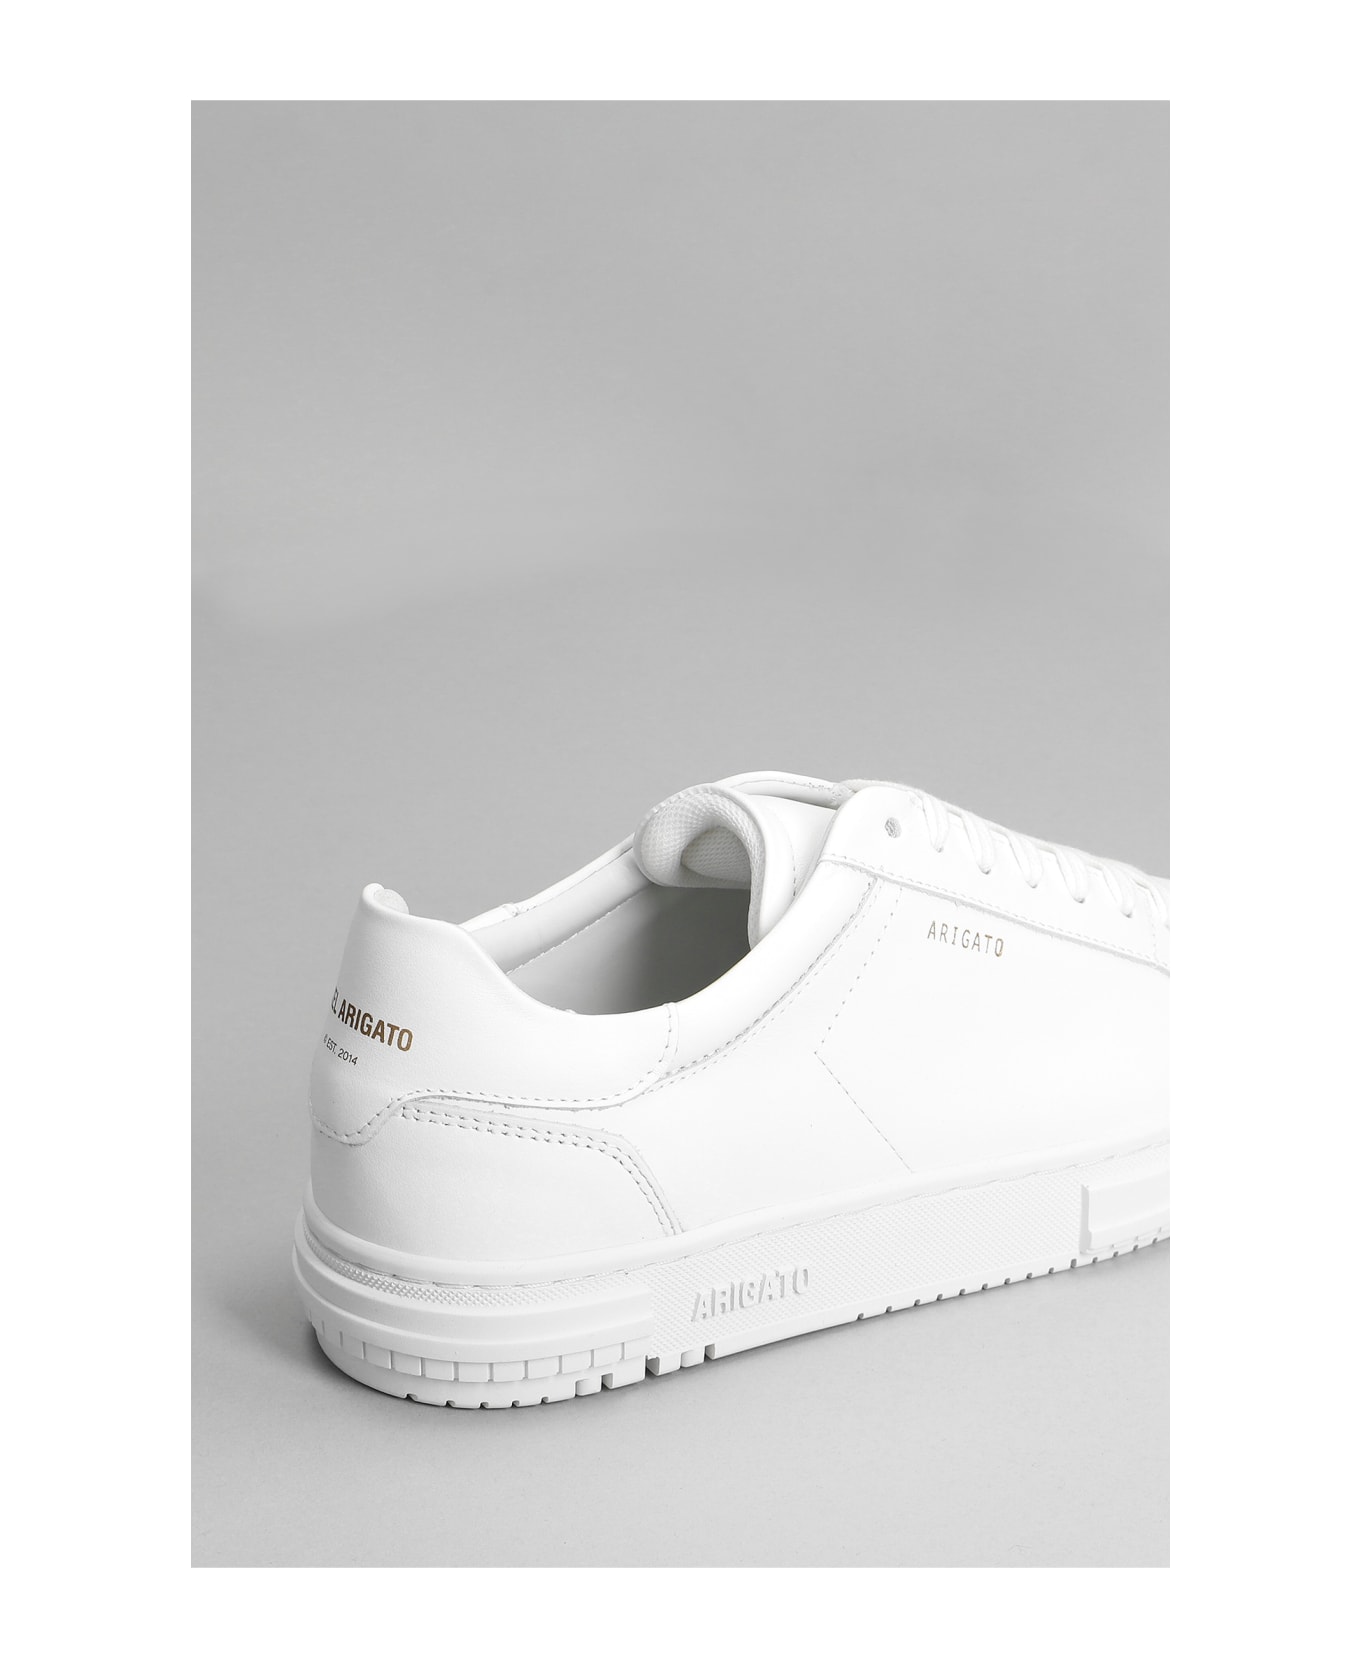 Axel Arigato Atlas Sneakers In White Leather - white スニーカー